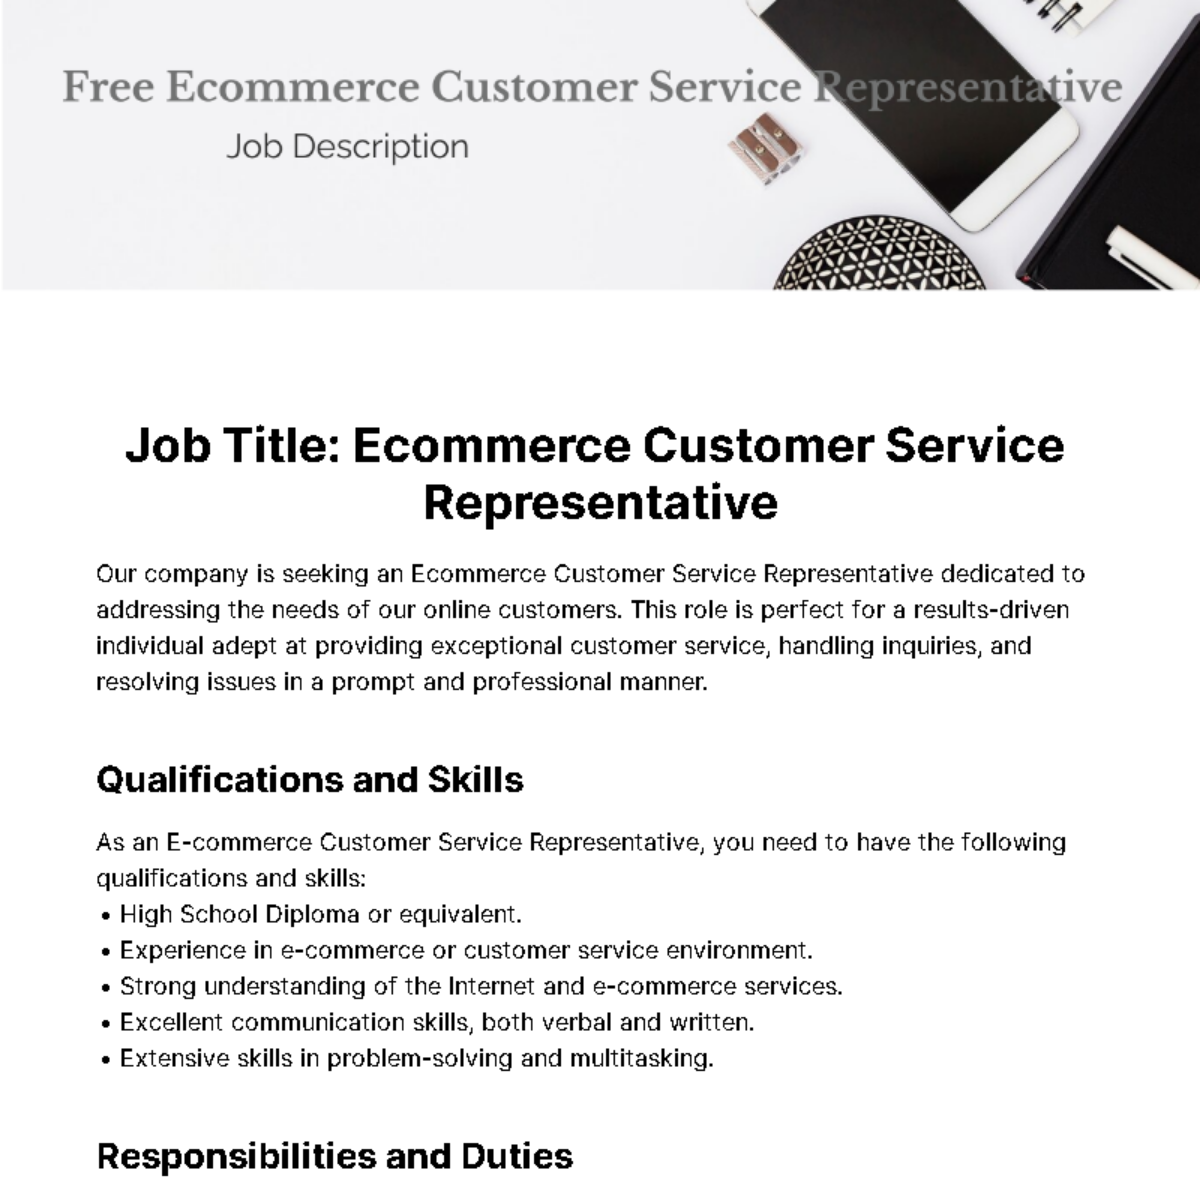 Free Ecommerce Customer Service Job Description Template